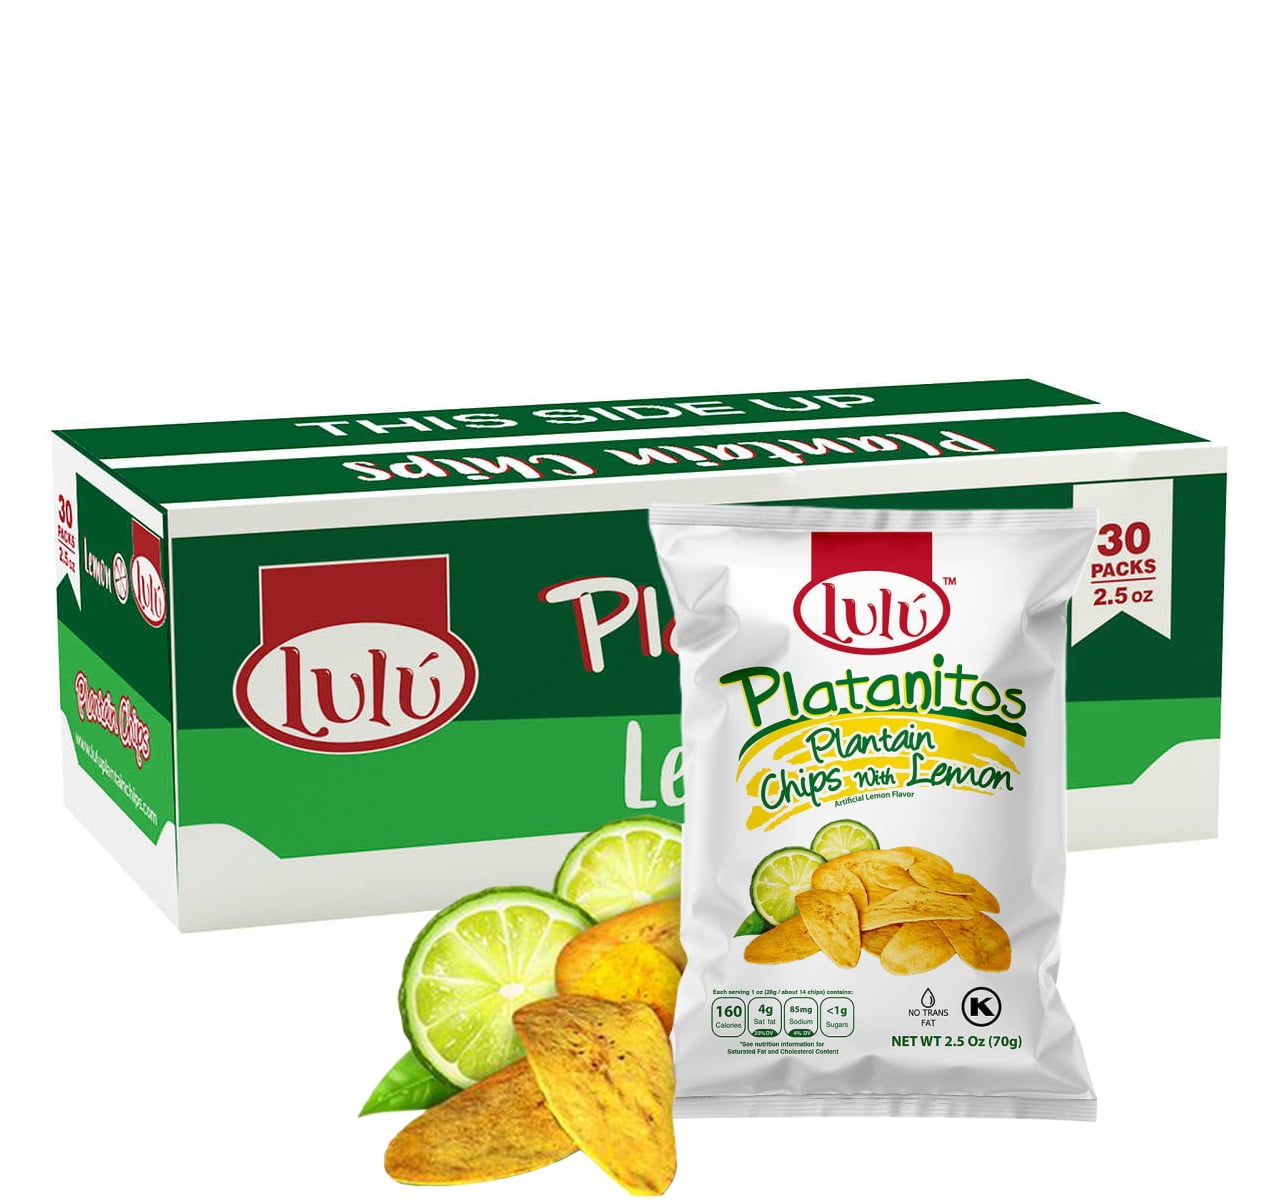 Lulu Platanitos, Plantain Chips with Lemon, 2.5 oz, 30 ct 